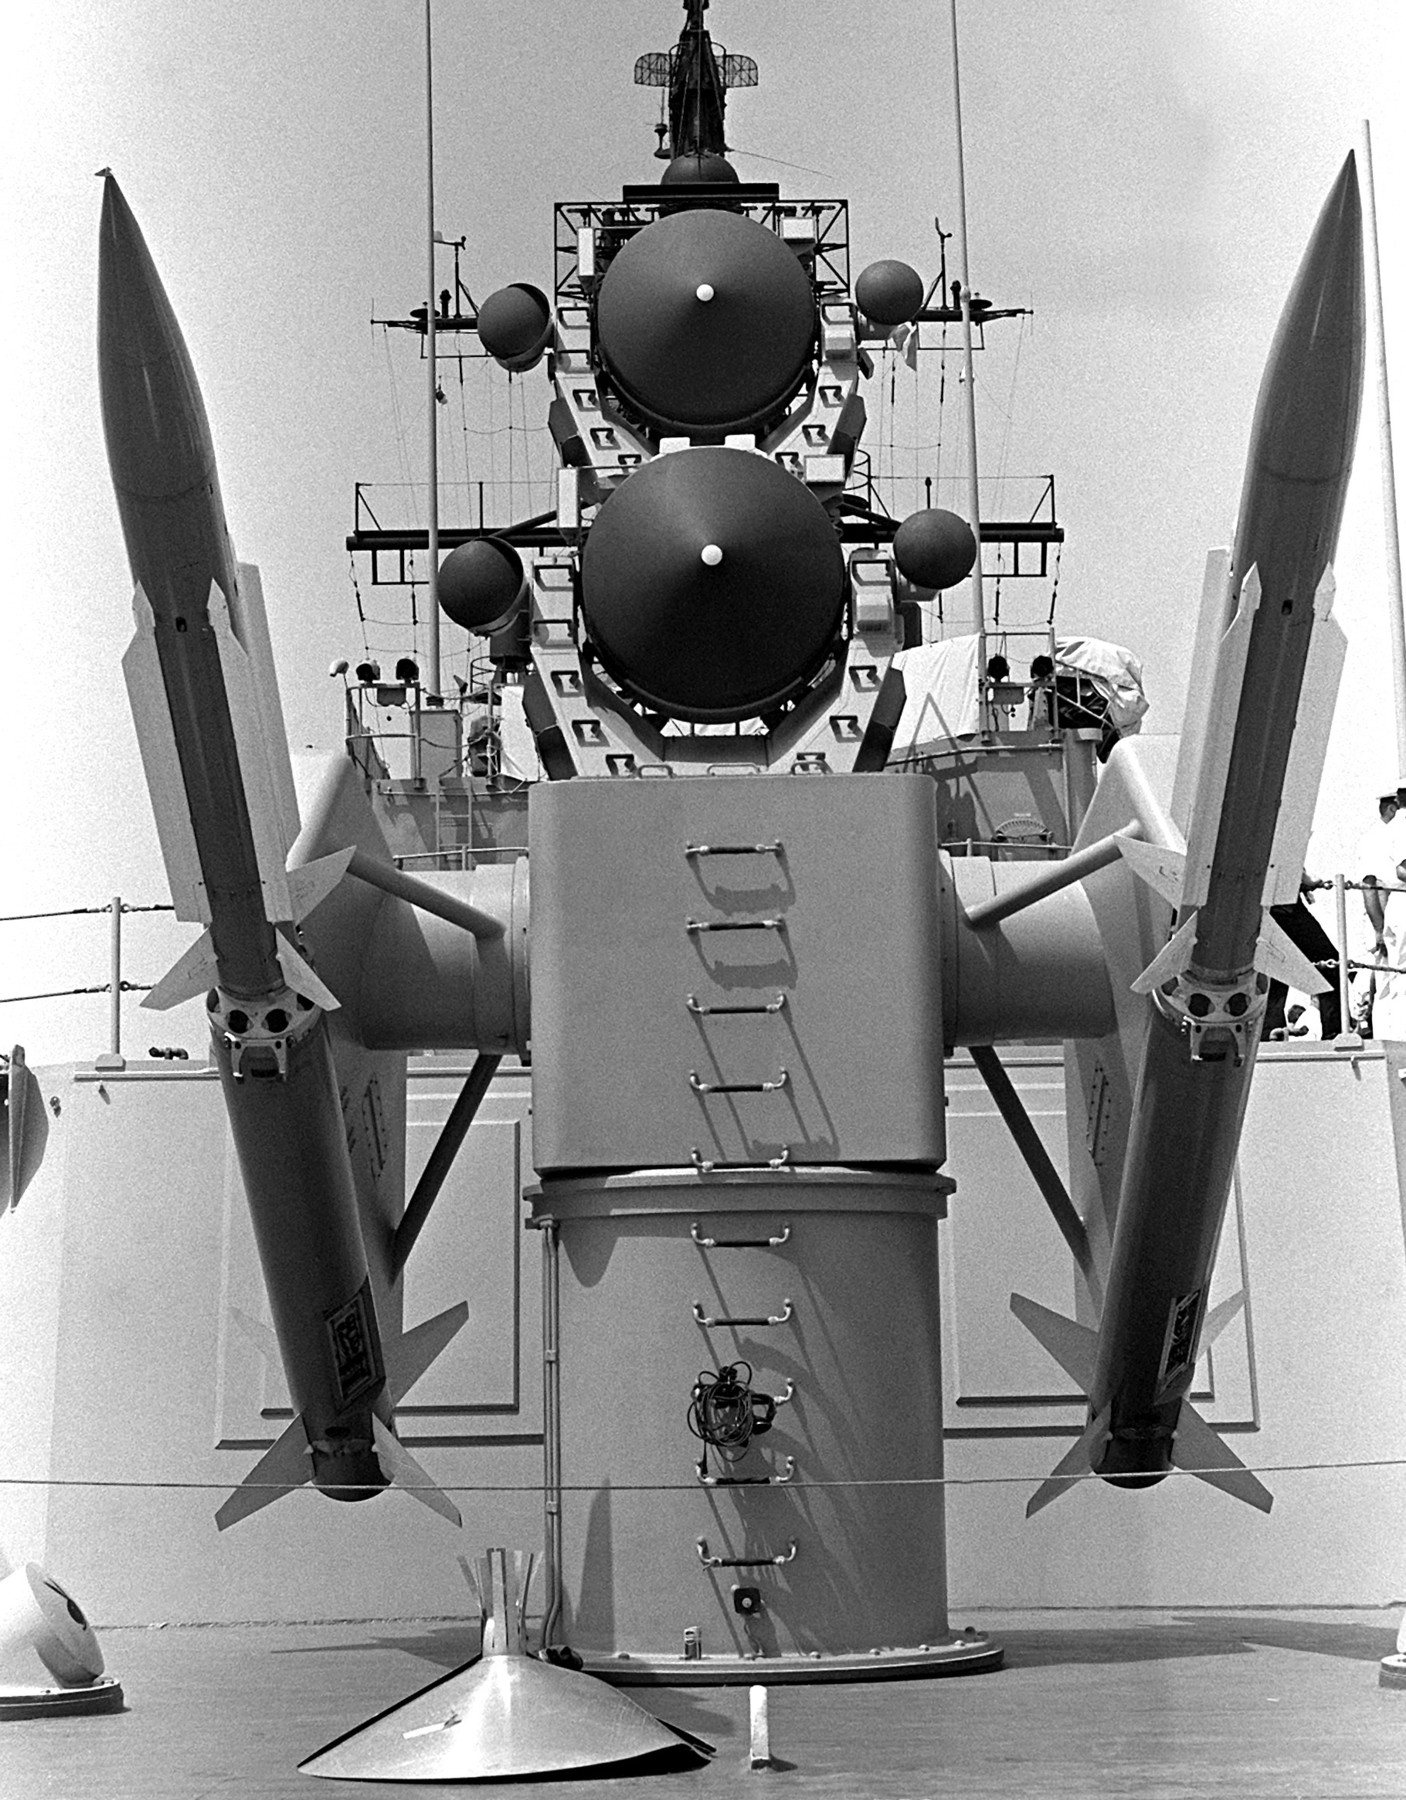 ddg-45 uss dewey farragut class destroyer us navy 1979 17 mk-10 launcher rim-67a standard missile sm-1er sam